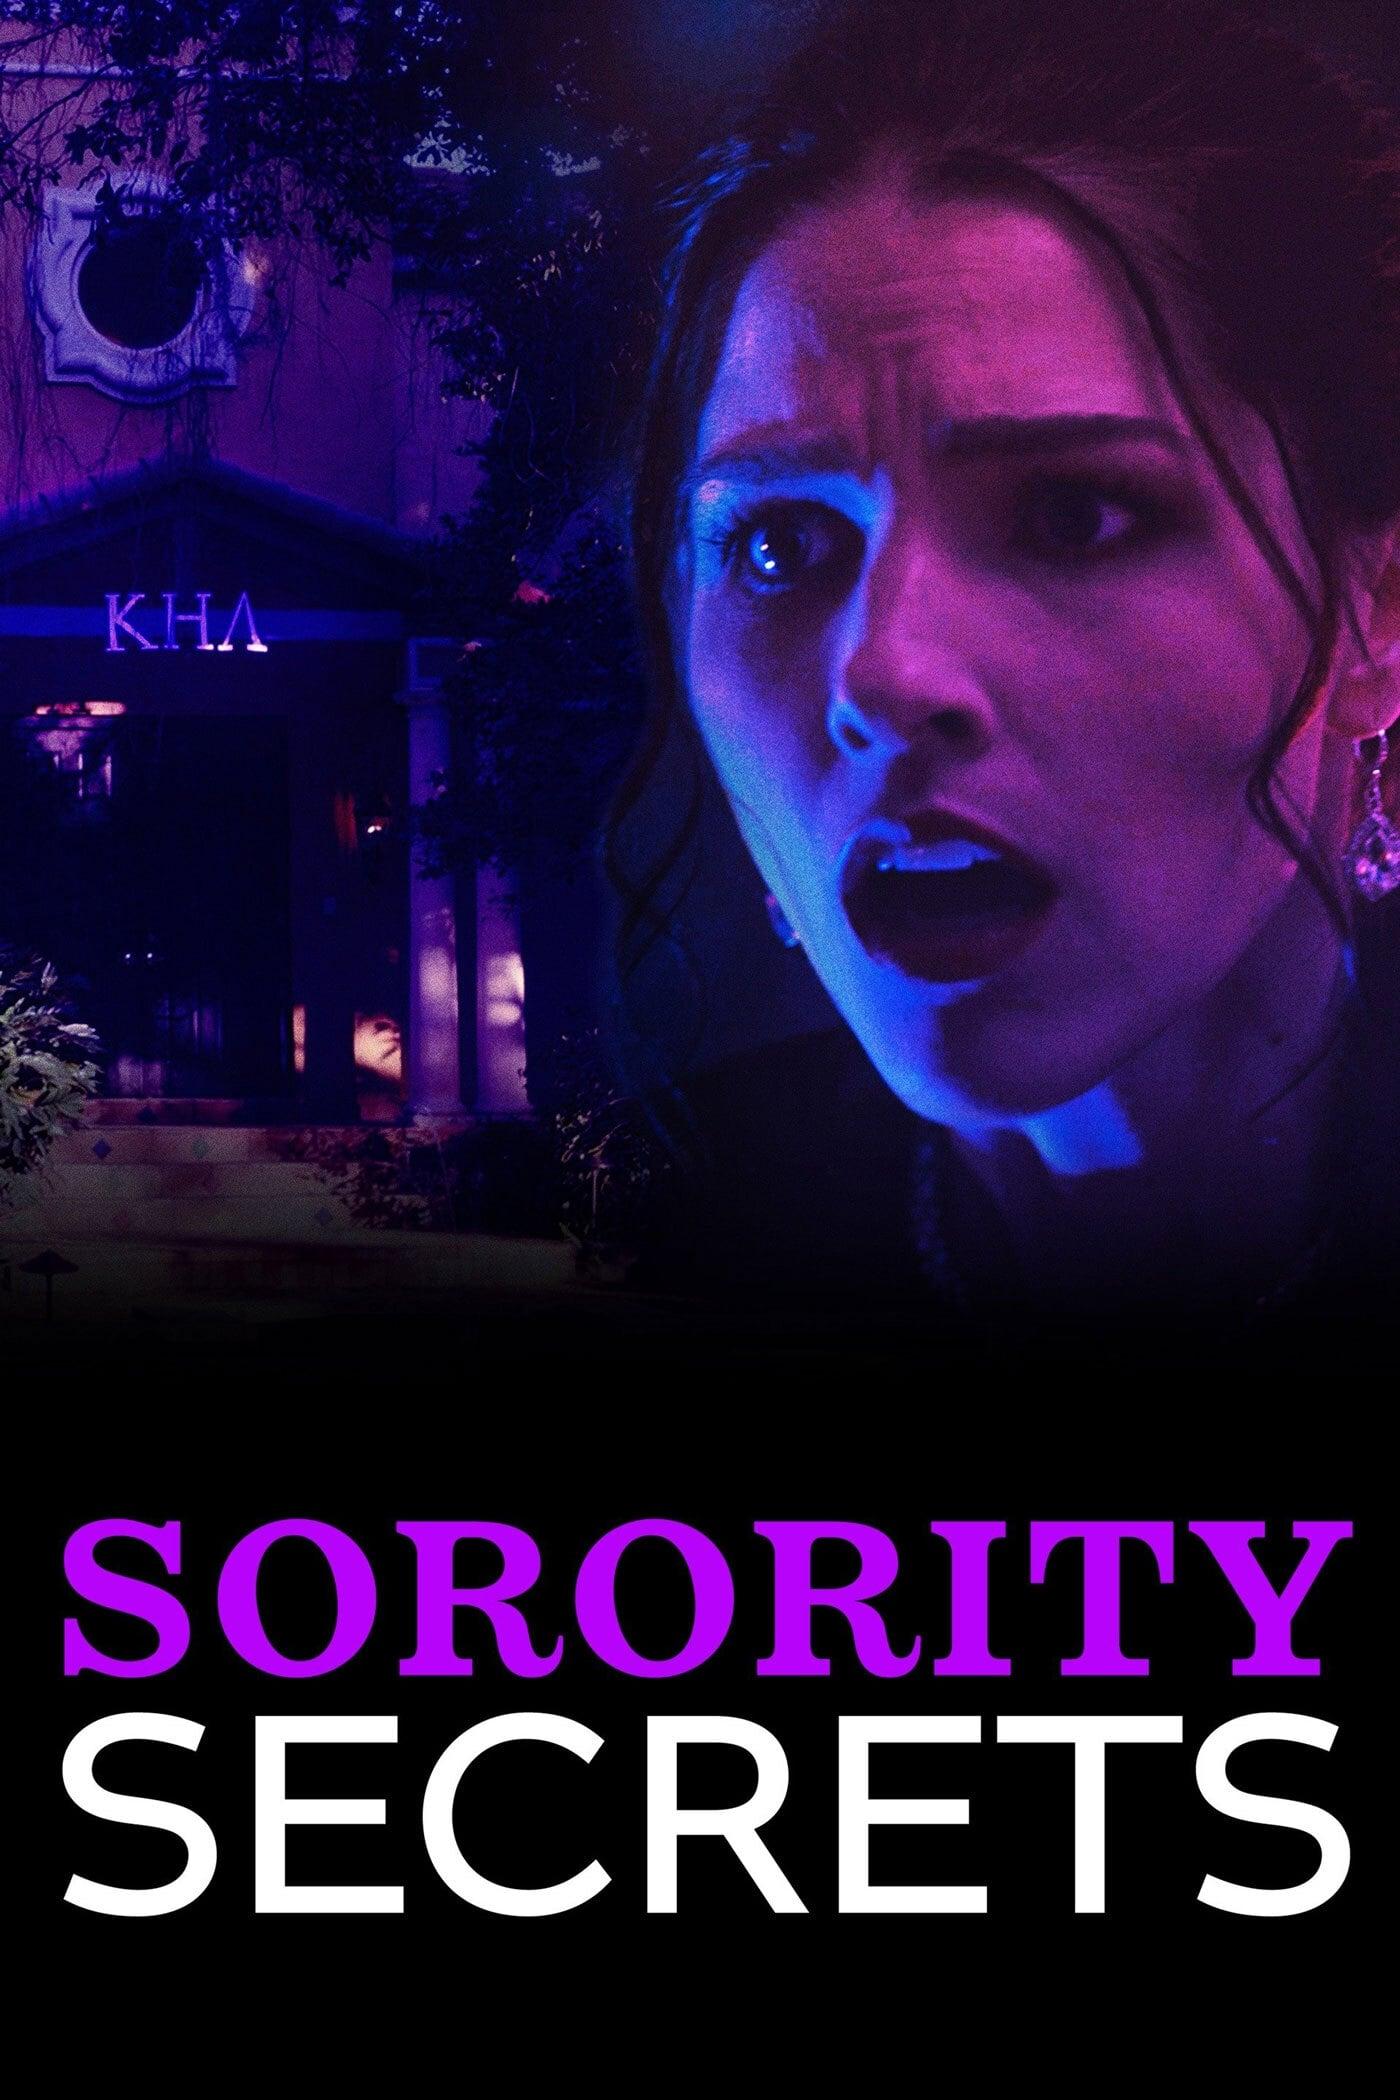 Sorority Secrets poster